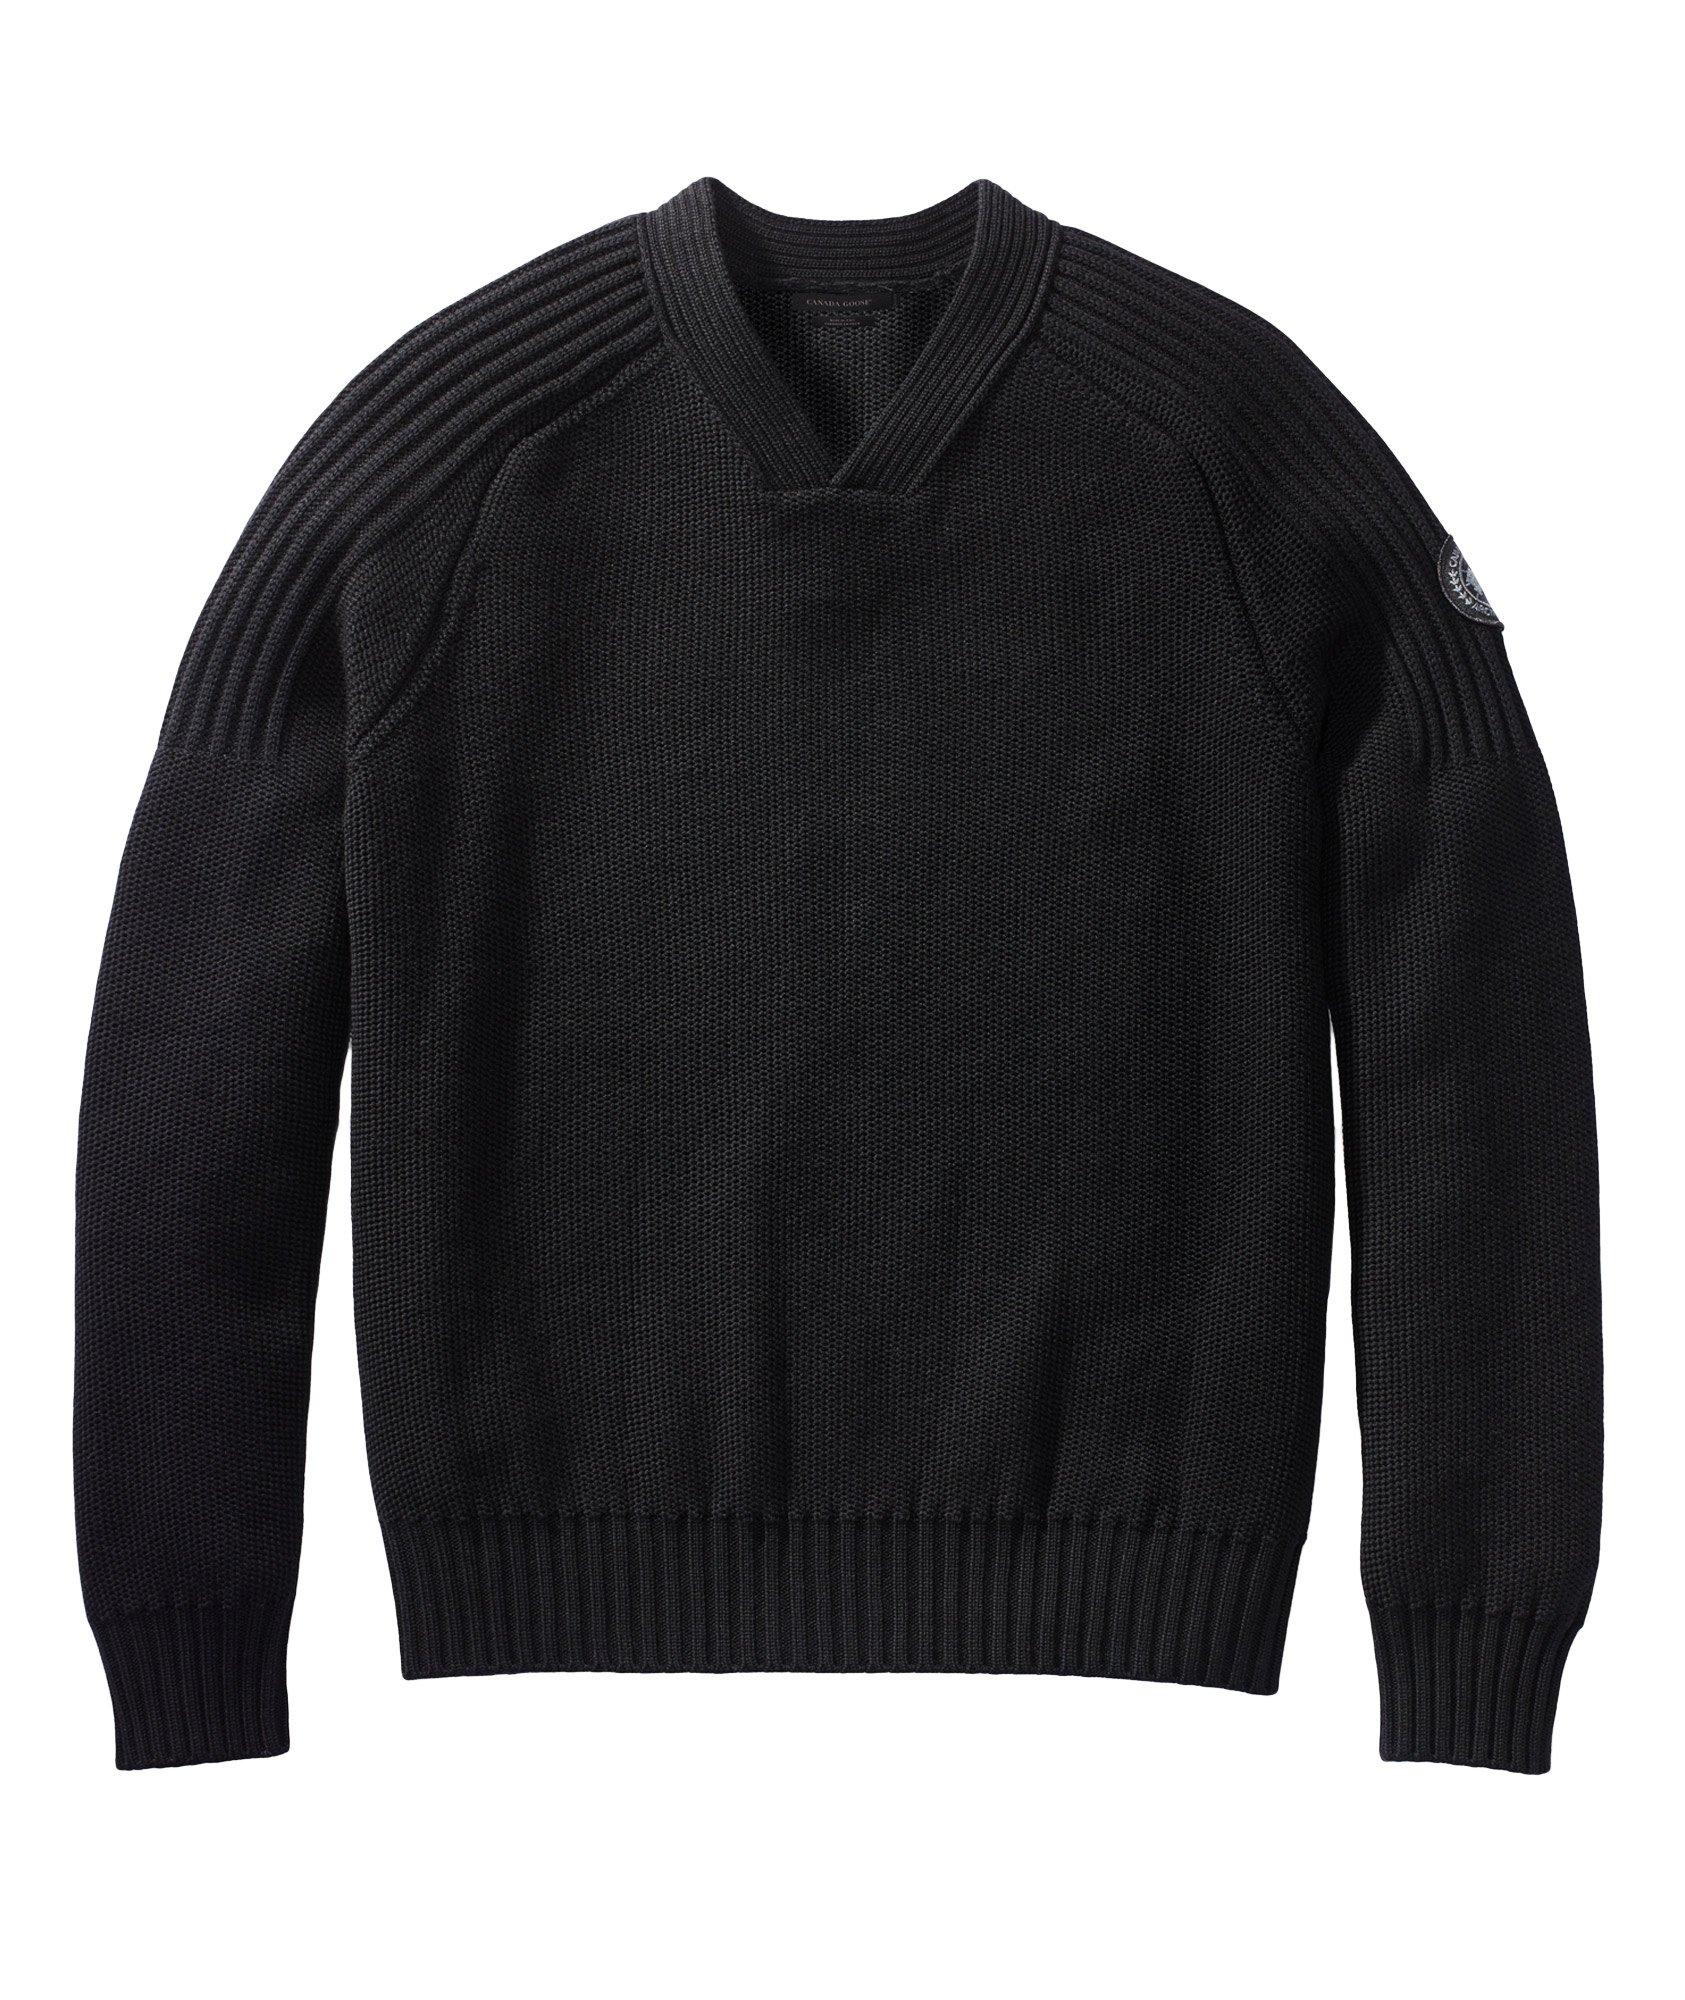 Valemount Knit Sweater image 0